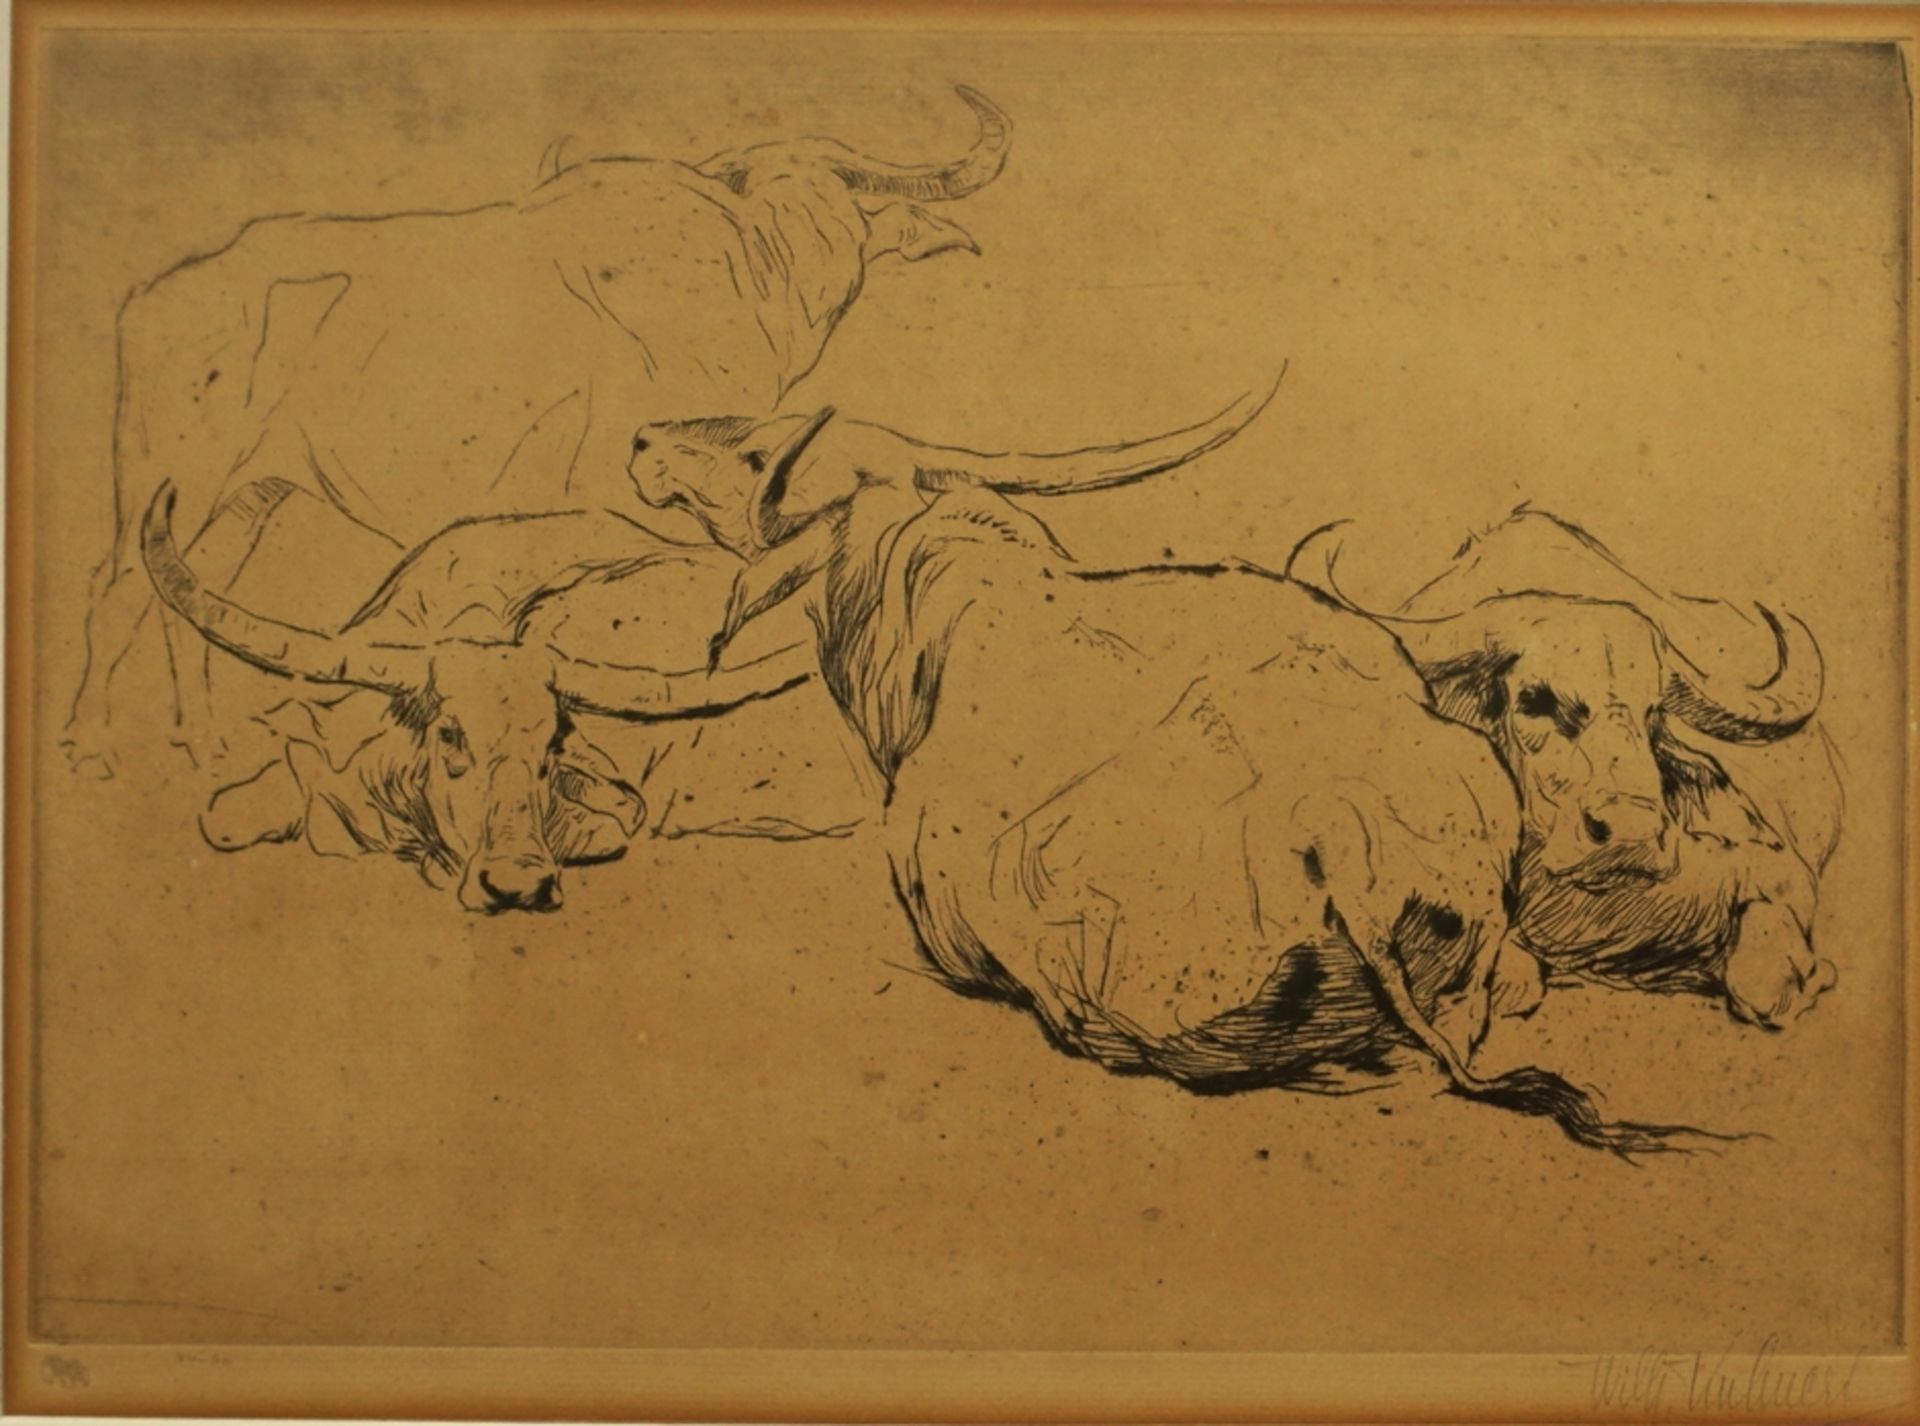 Wilhelm Kuhnert (1865, Oppeln - 1926, Flims), "Water Buffalo", etching